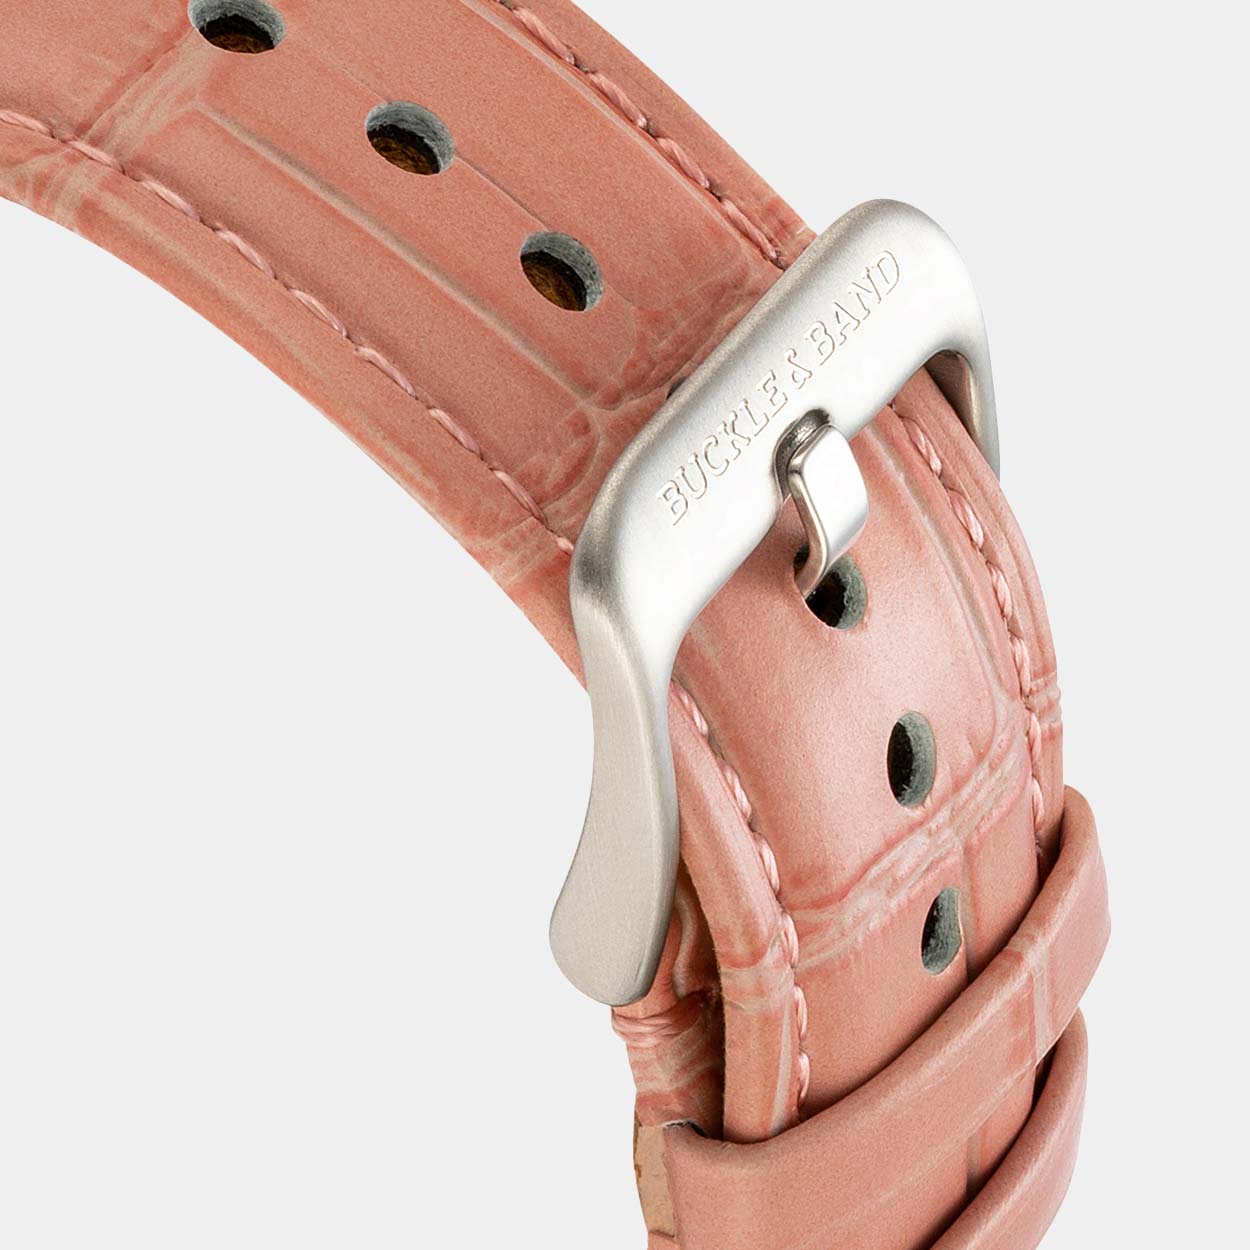 Miam Apple Watch Strap - Pink - Buckle & Band - MIA-38-PIN-GL